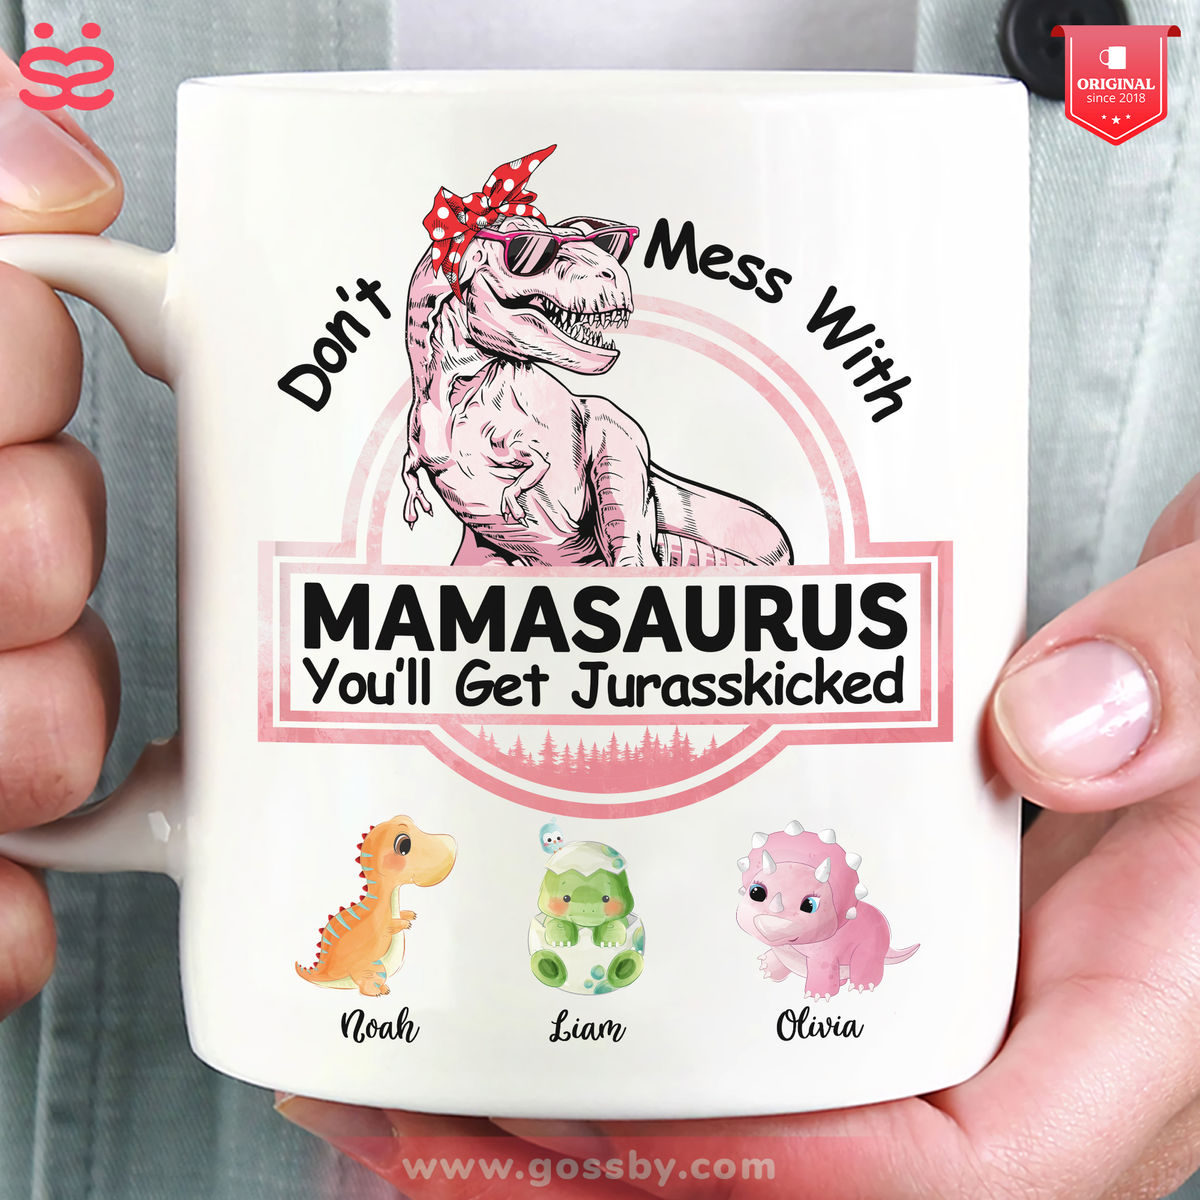 Mamasaurus Mug – 565 Design